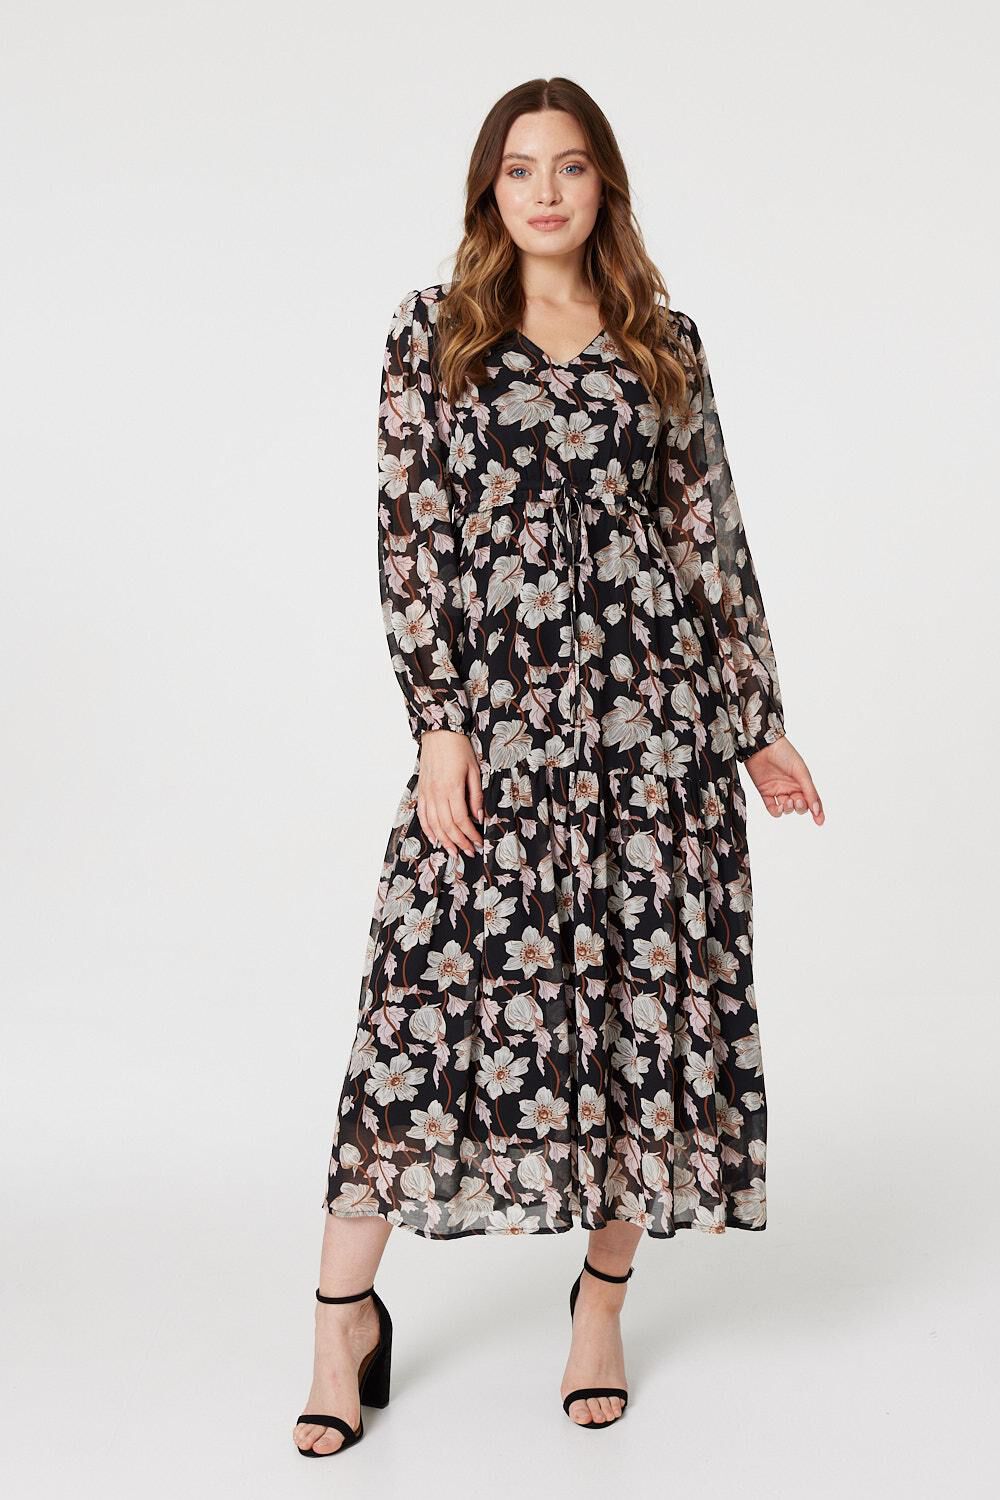 Izabel London Black - Floral Drawstring Waist Midi Dress, Size: 12